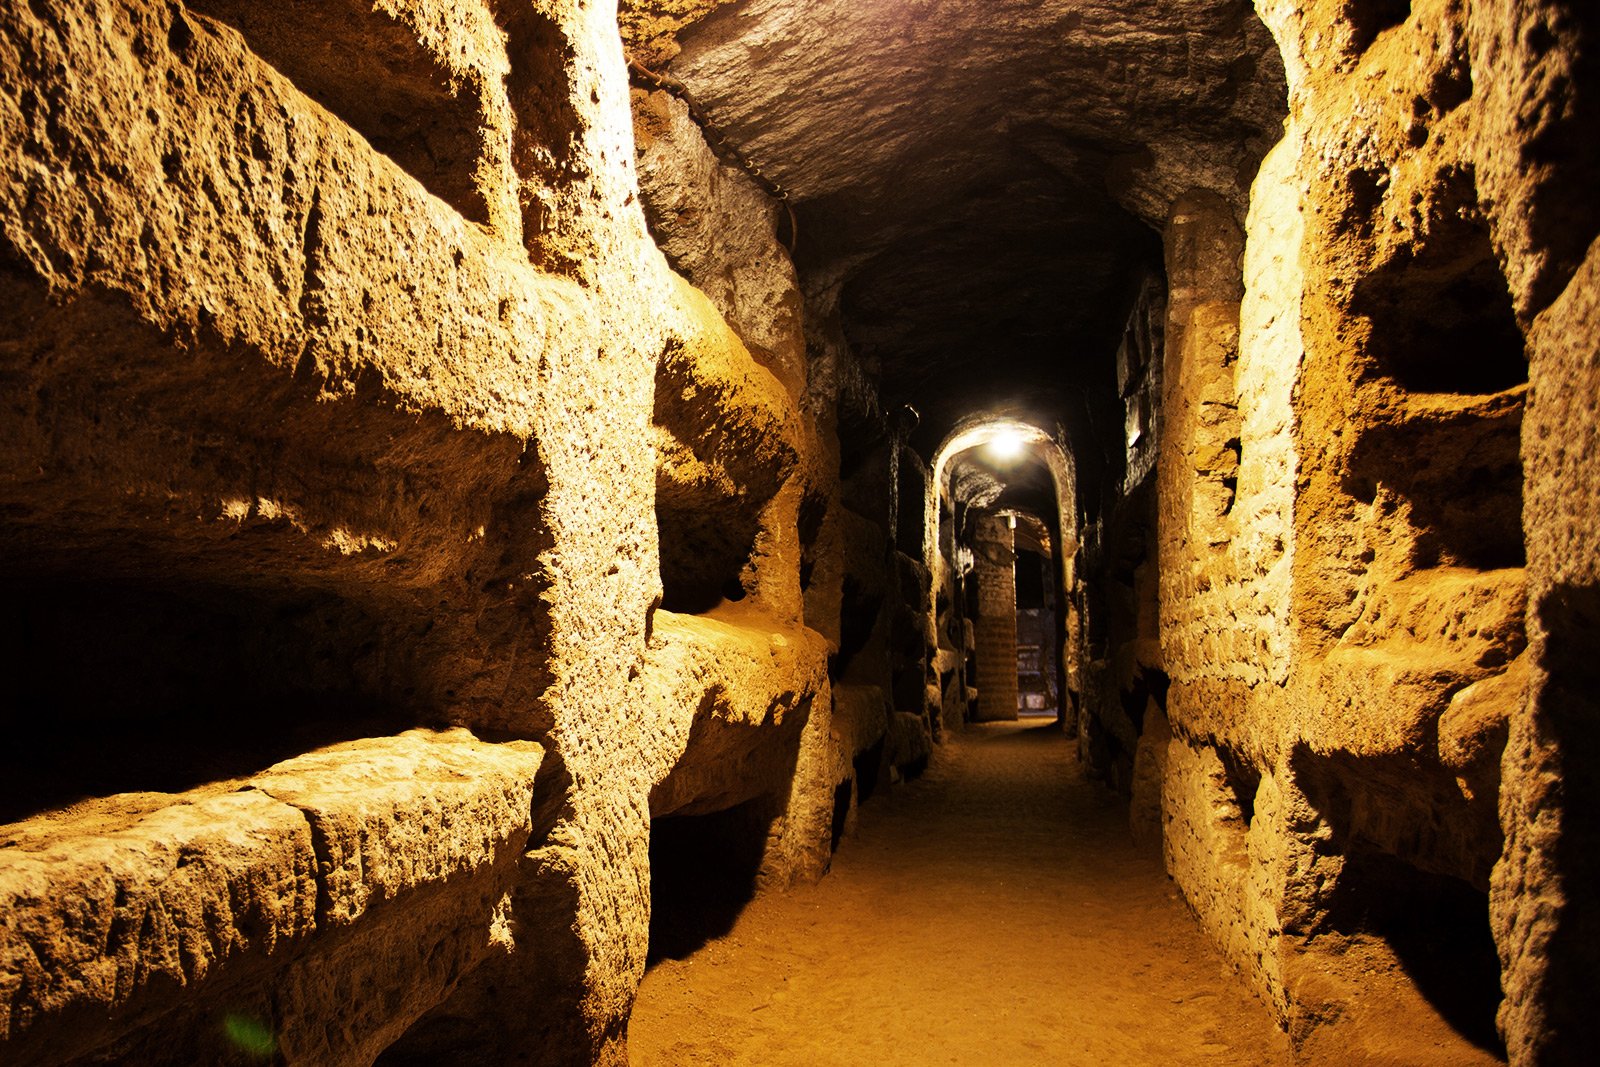 The catacombs of St. Callixtus, Rome